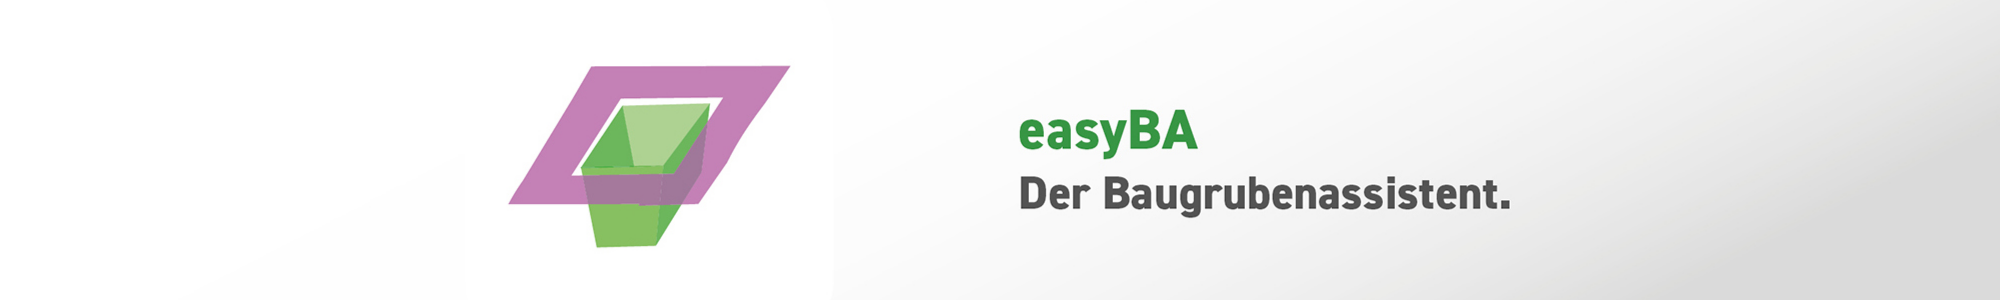 easyBA - isl-kocher GmbH